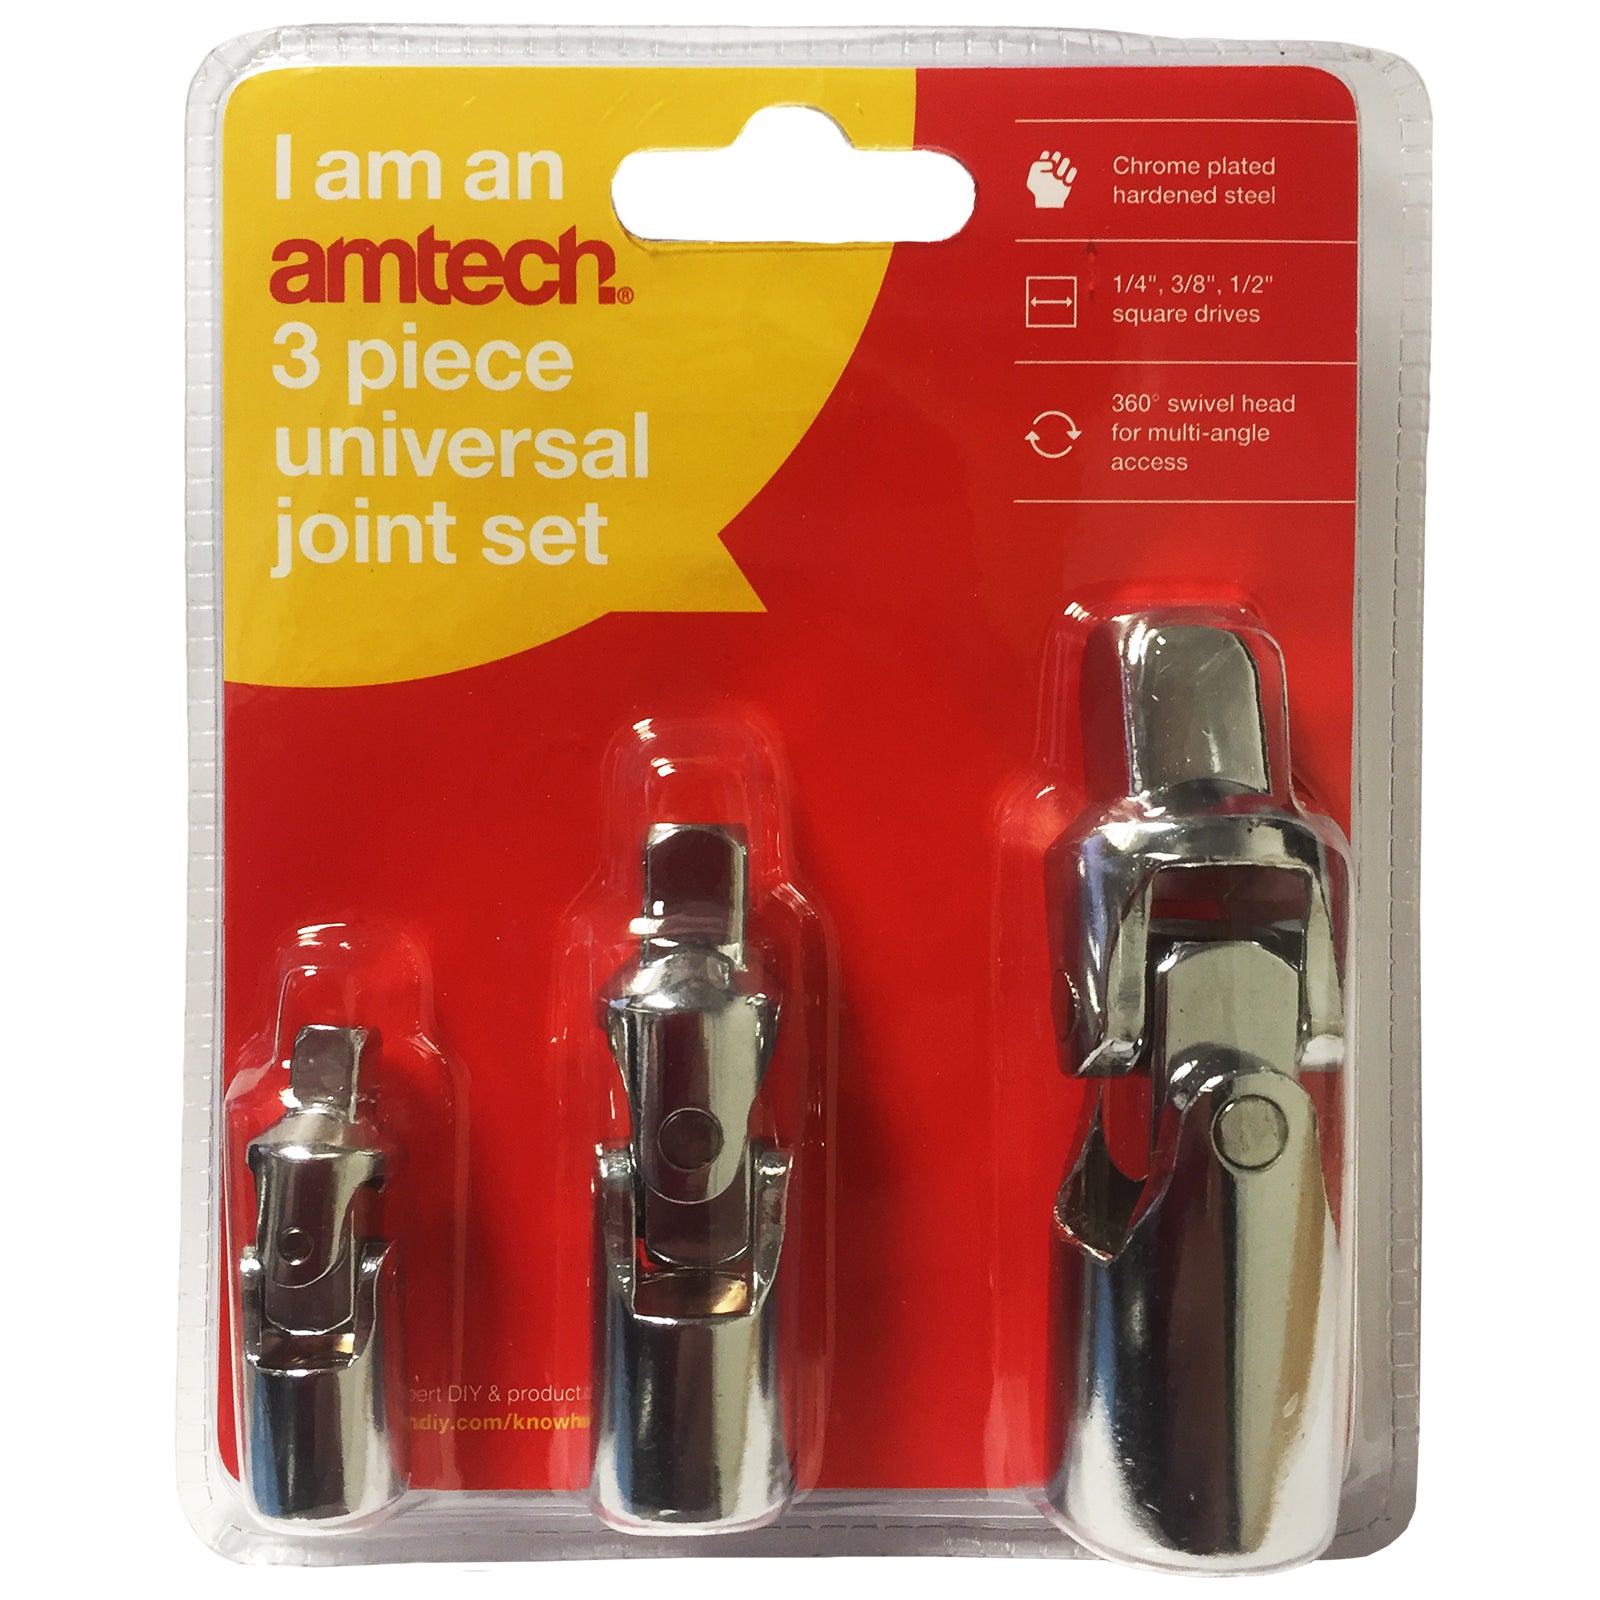 Amtech 3 Piece Universal Joint Set 1/4" 3/8" 1/2" Drive